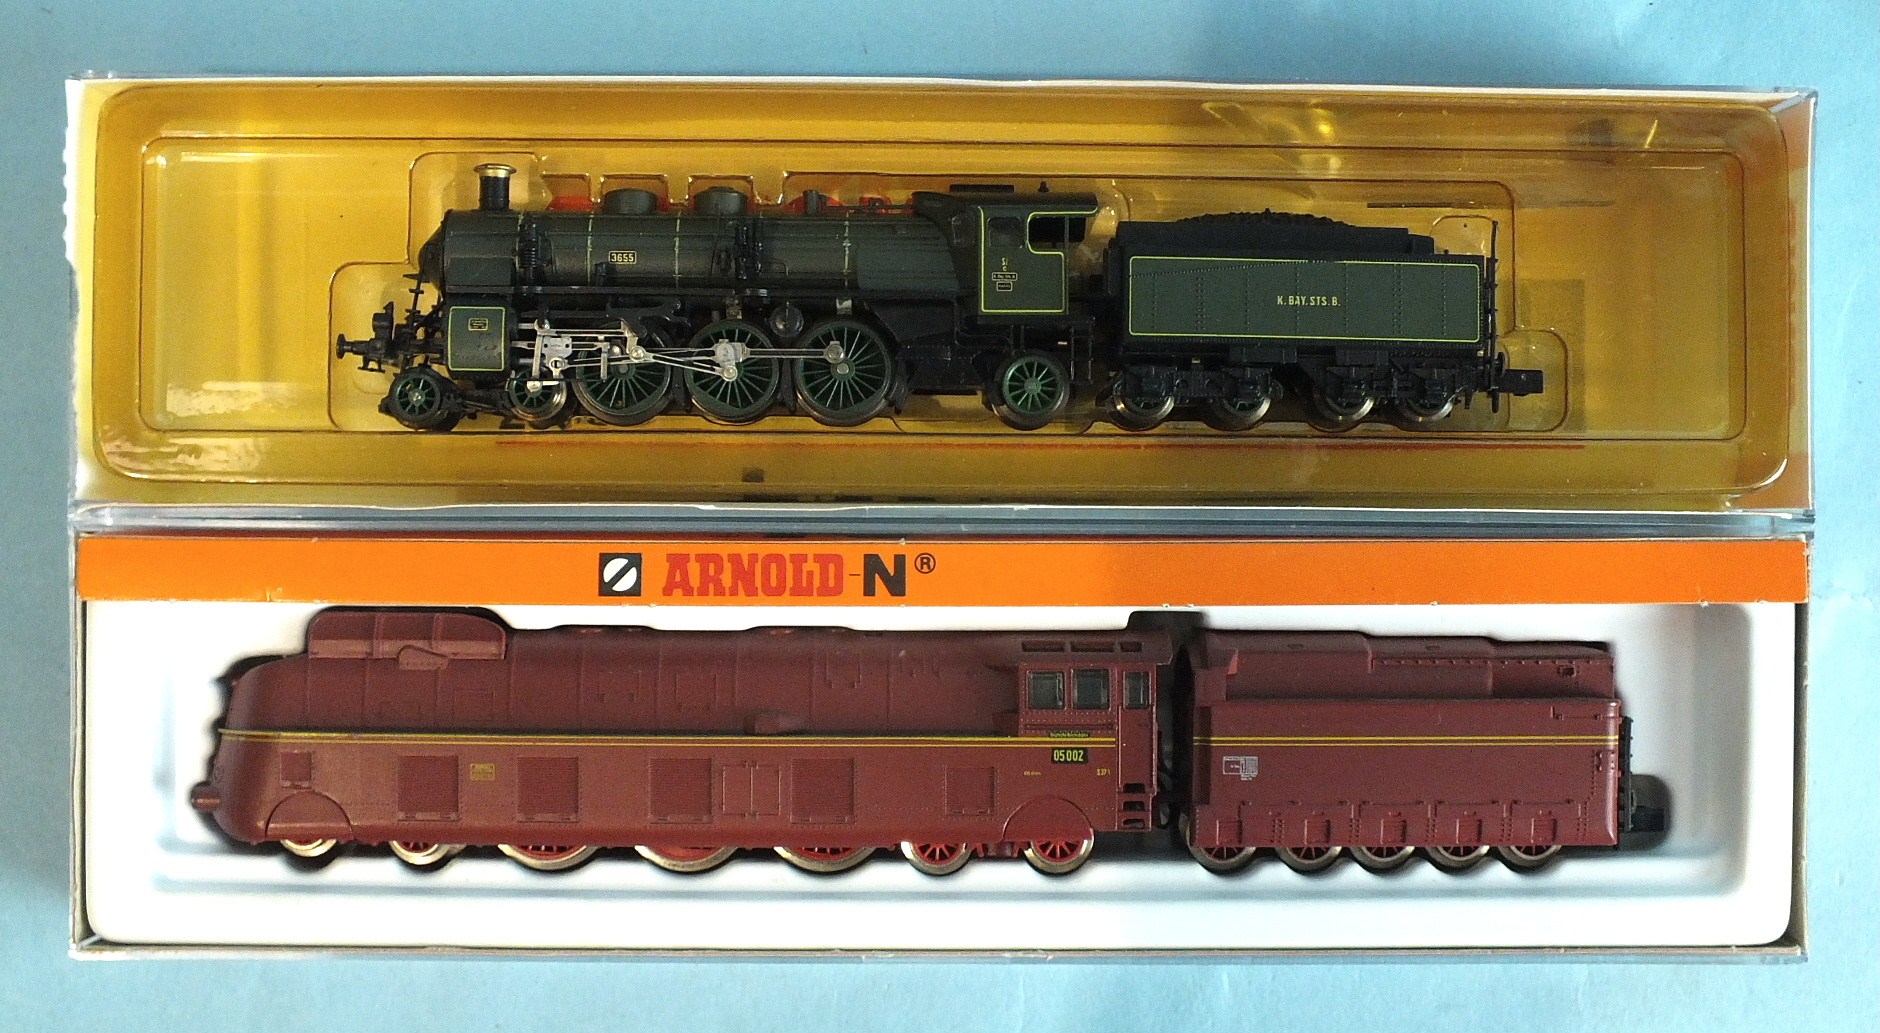 Arnold, N gauge, 2217 4-6-4 locomotive and tender RN05002 and 2539 4-6-4 locomotive and tender